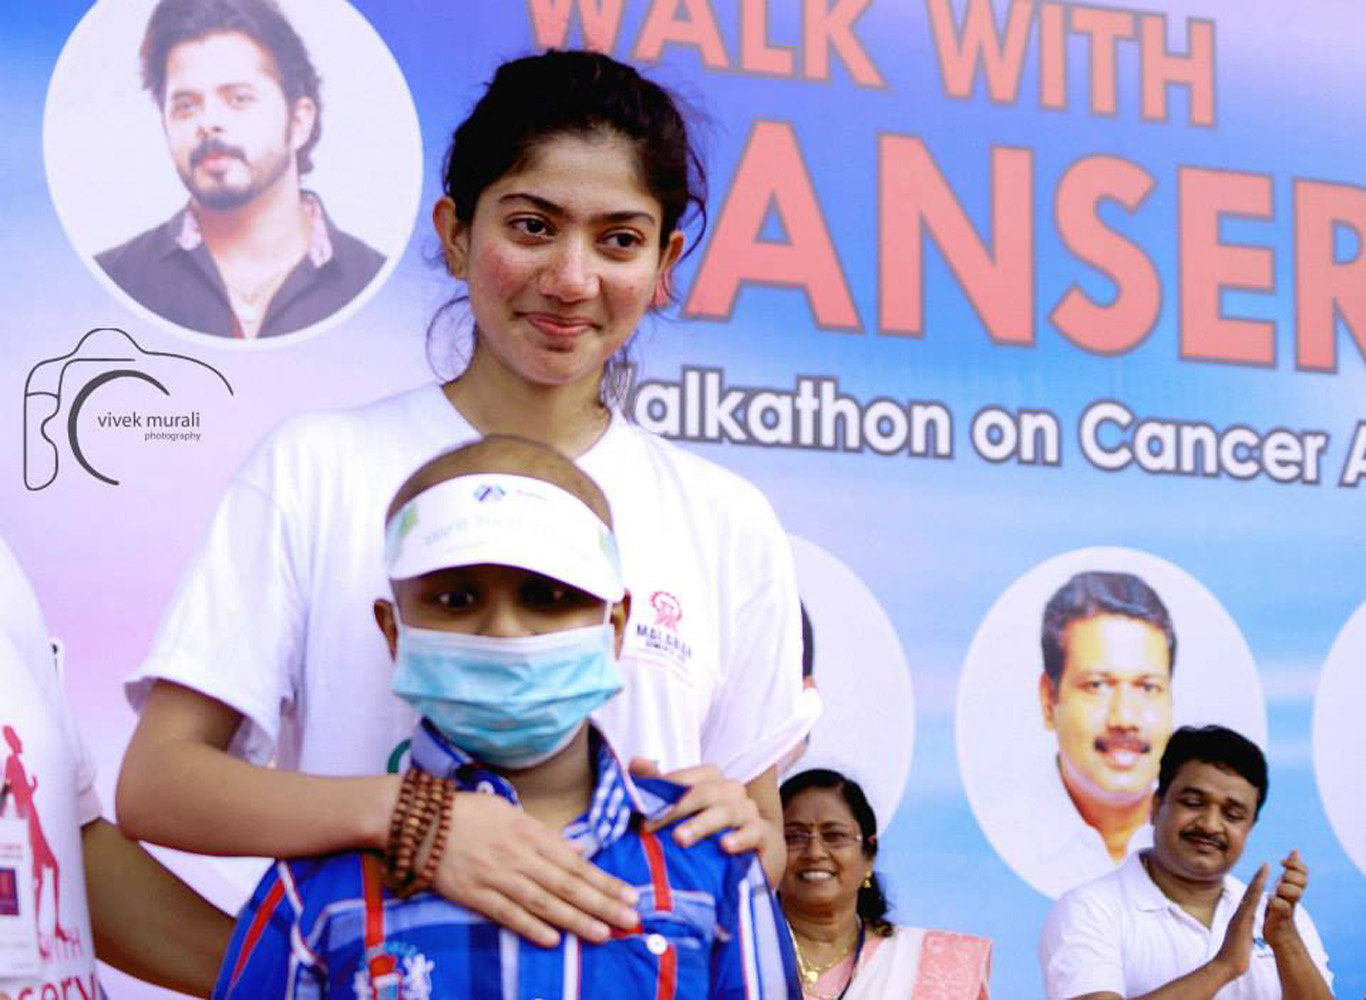 Sai Pallavi Latest Photos-Walk with cancer